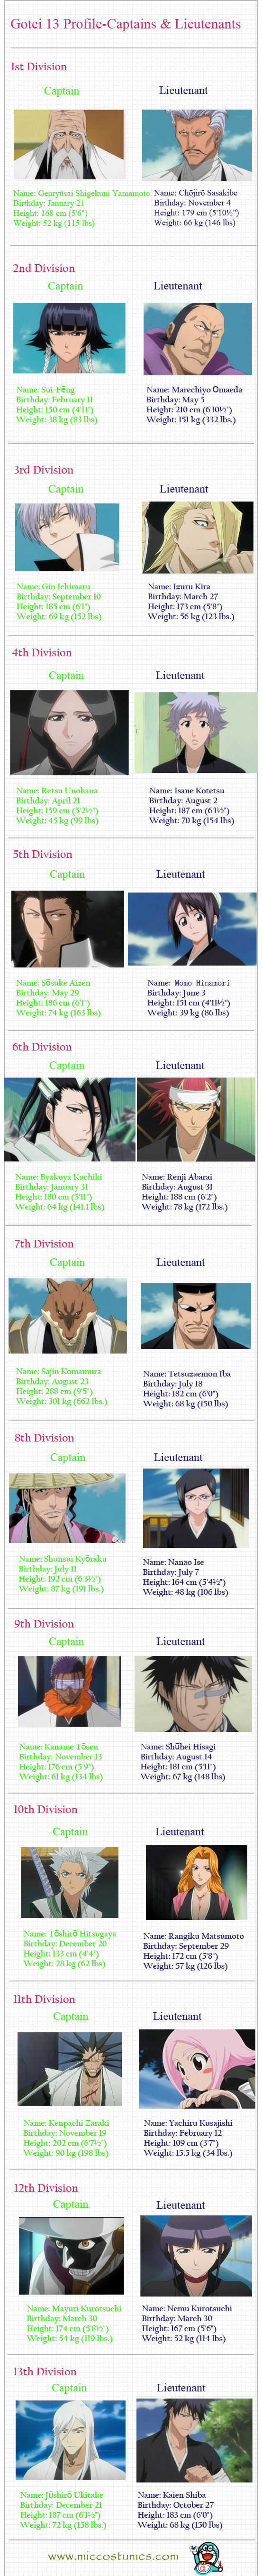 Gotei 13 Captains and Lieutenants [Infographic]